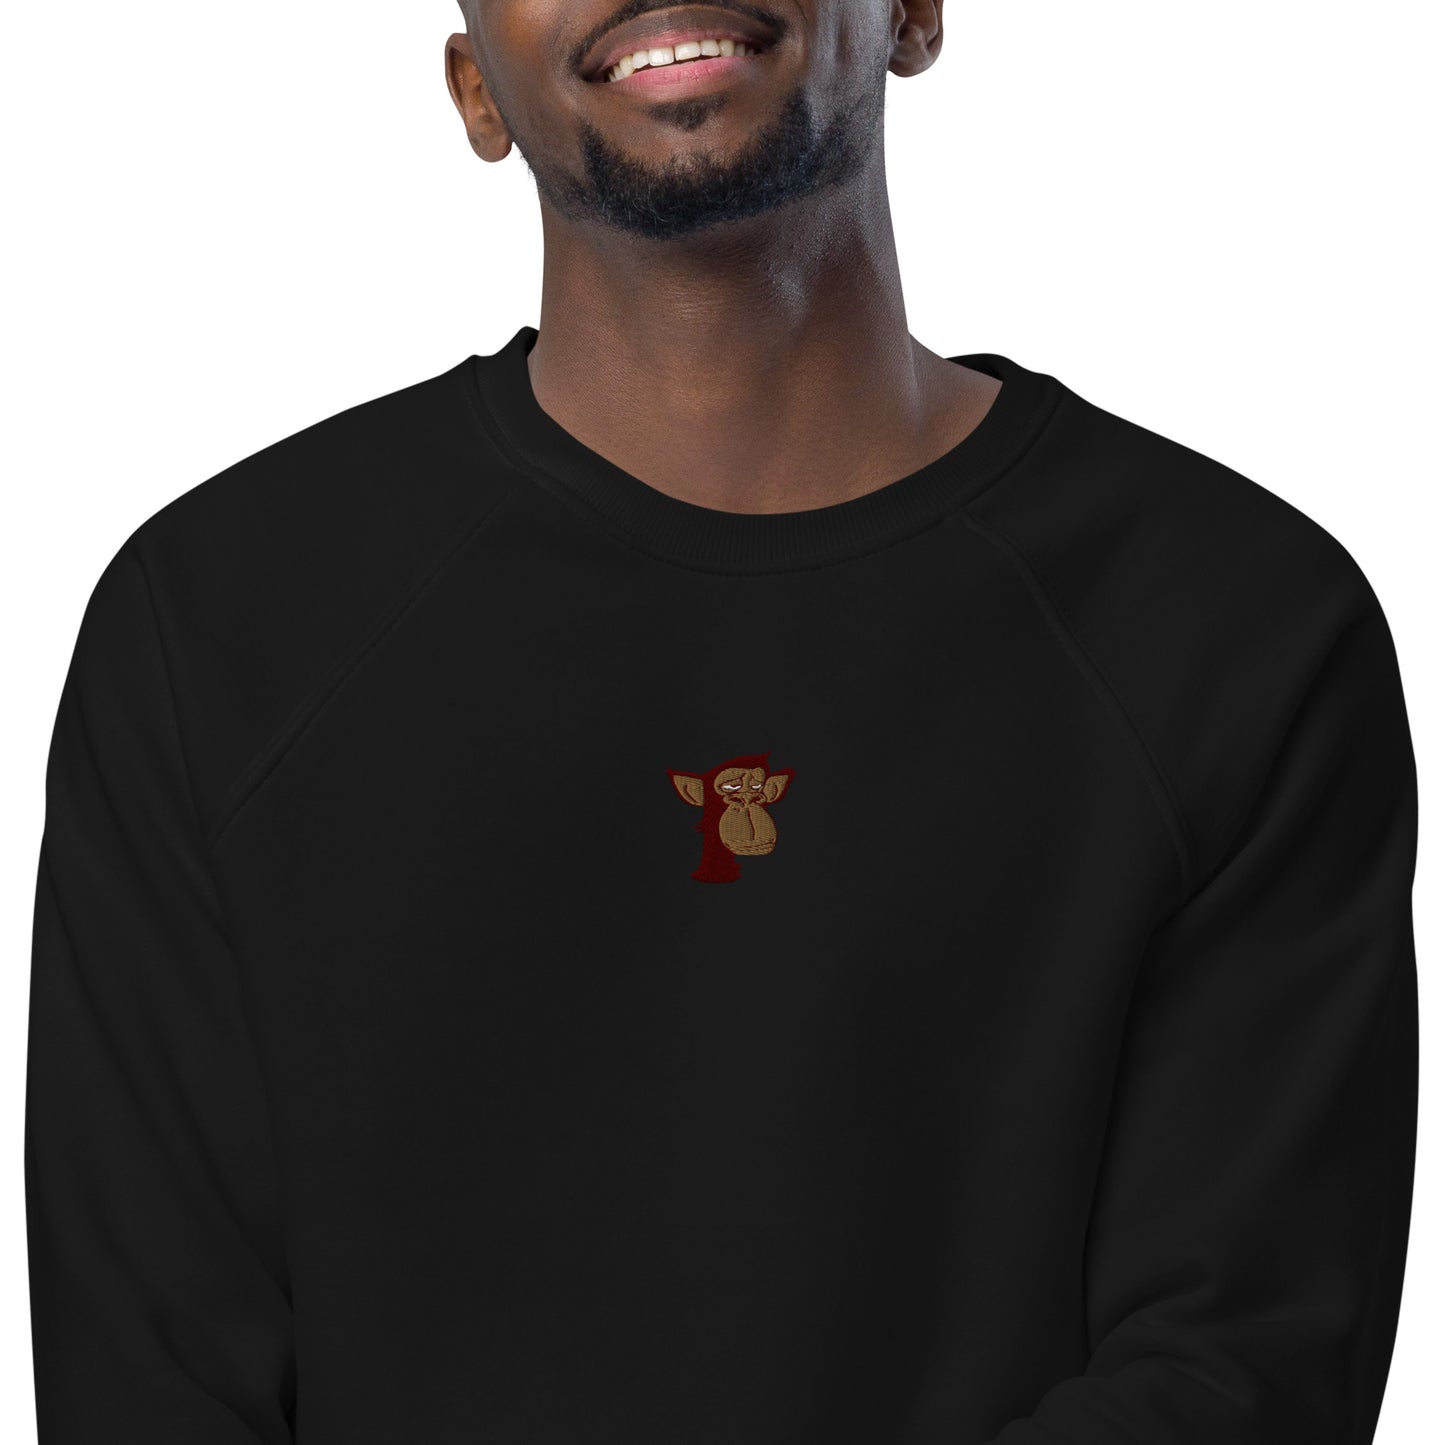 Unisex organic raglan sweatshirt with front embroidered logo feat Polygon Ape YC #6437